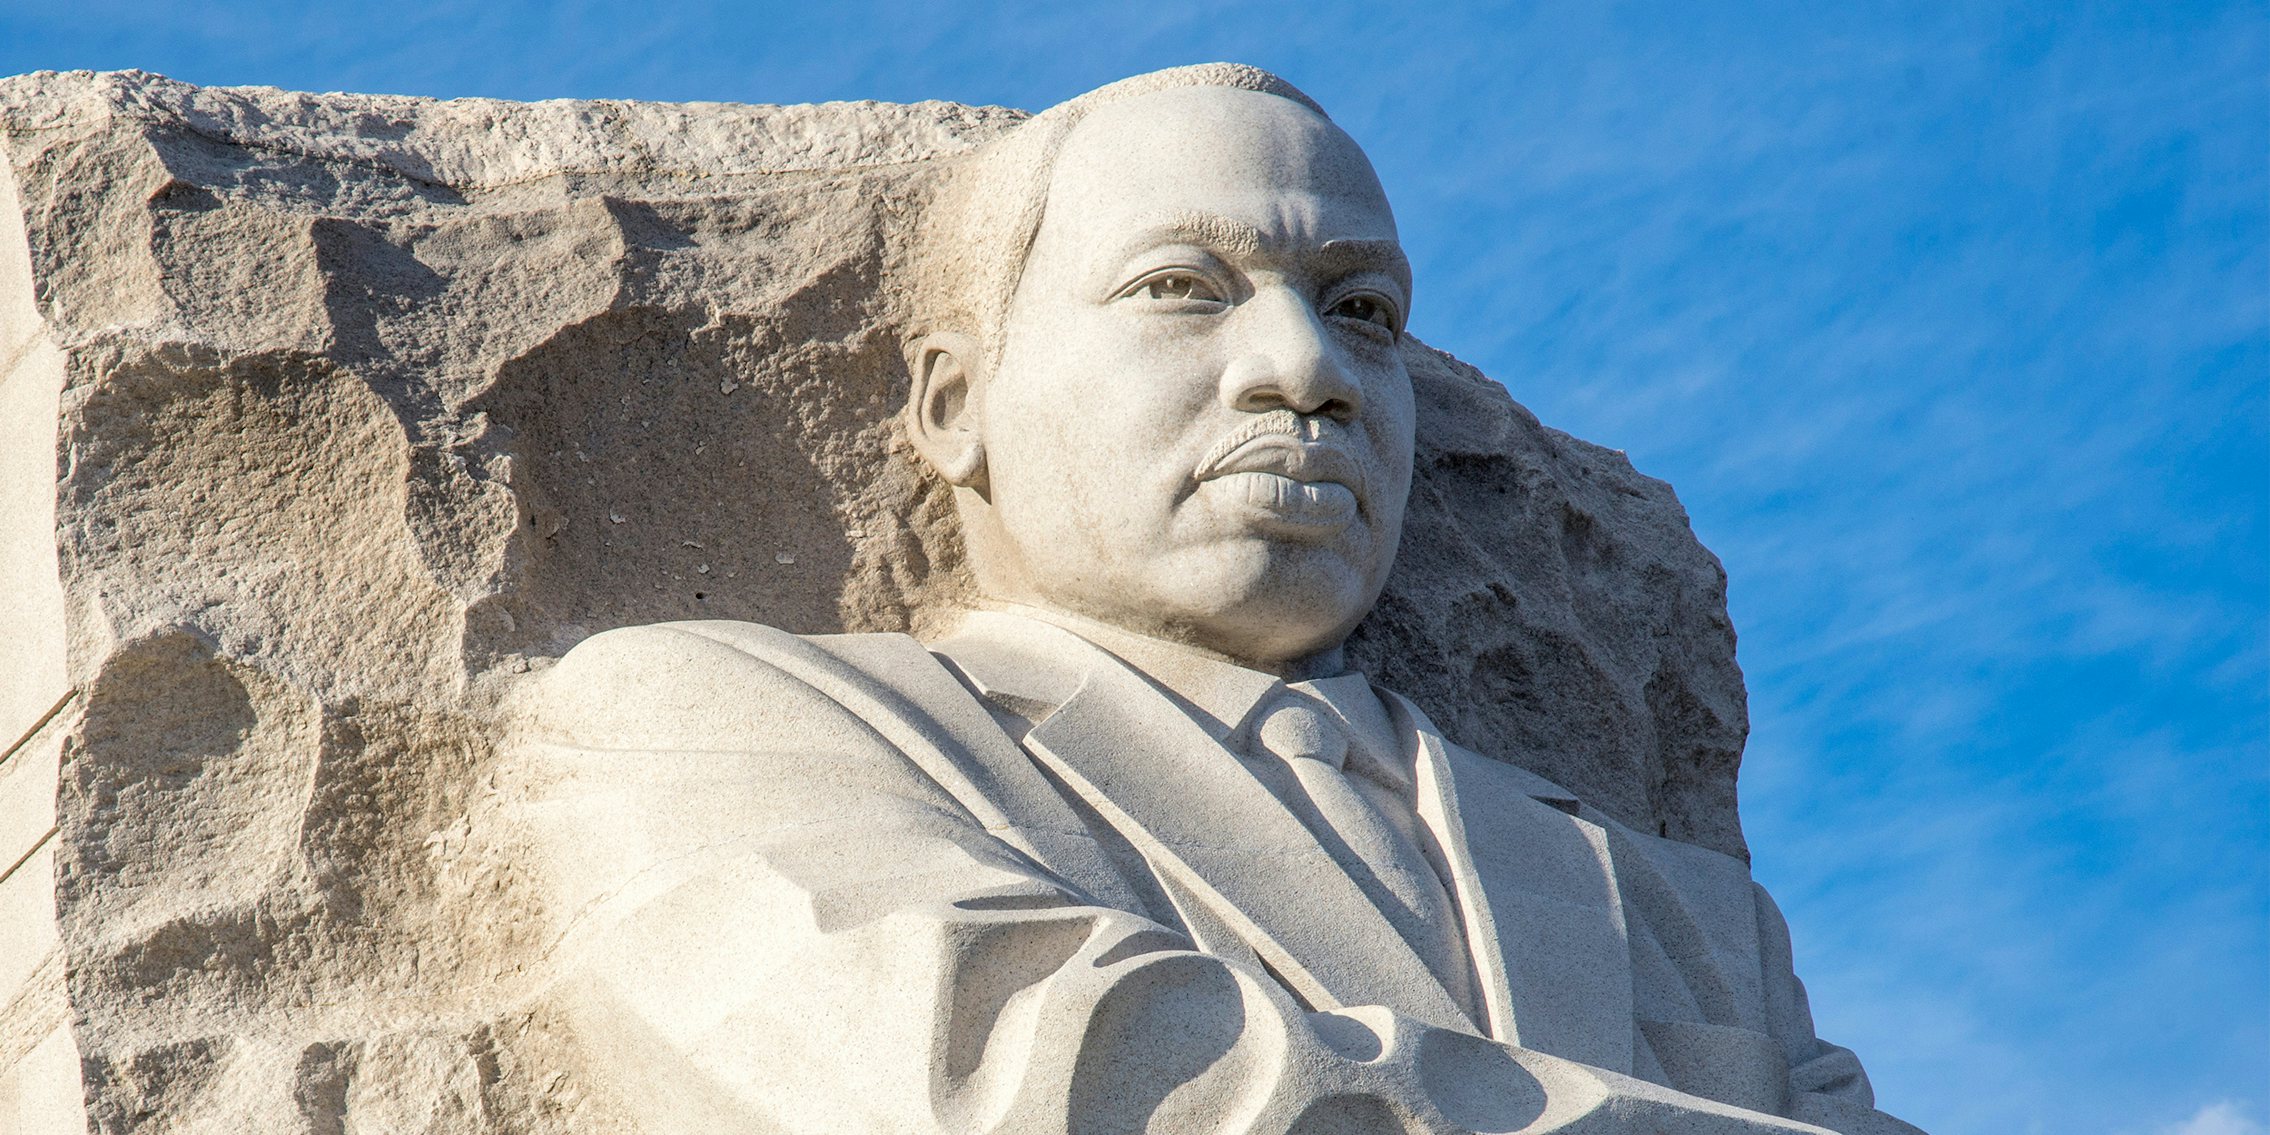 Dr Martin Luther King Jr Memorial, Washington DC